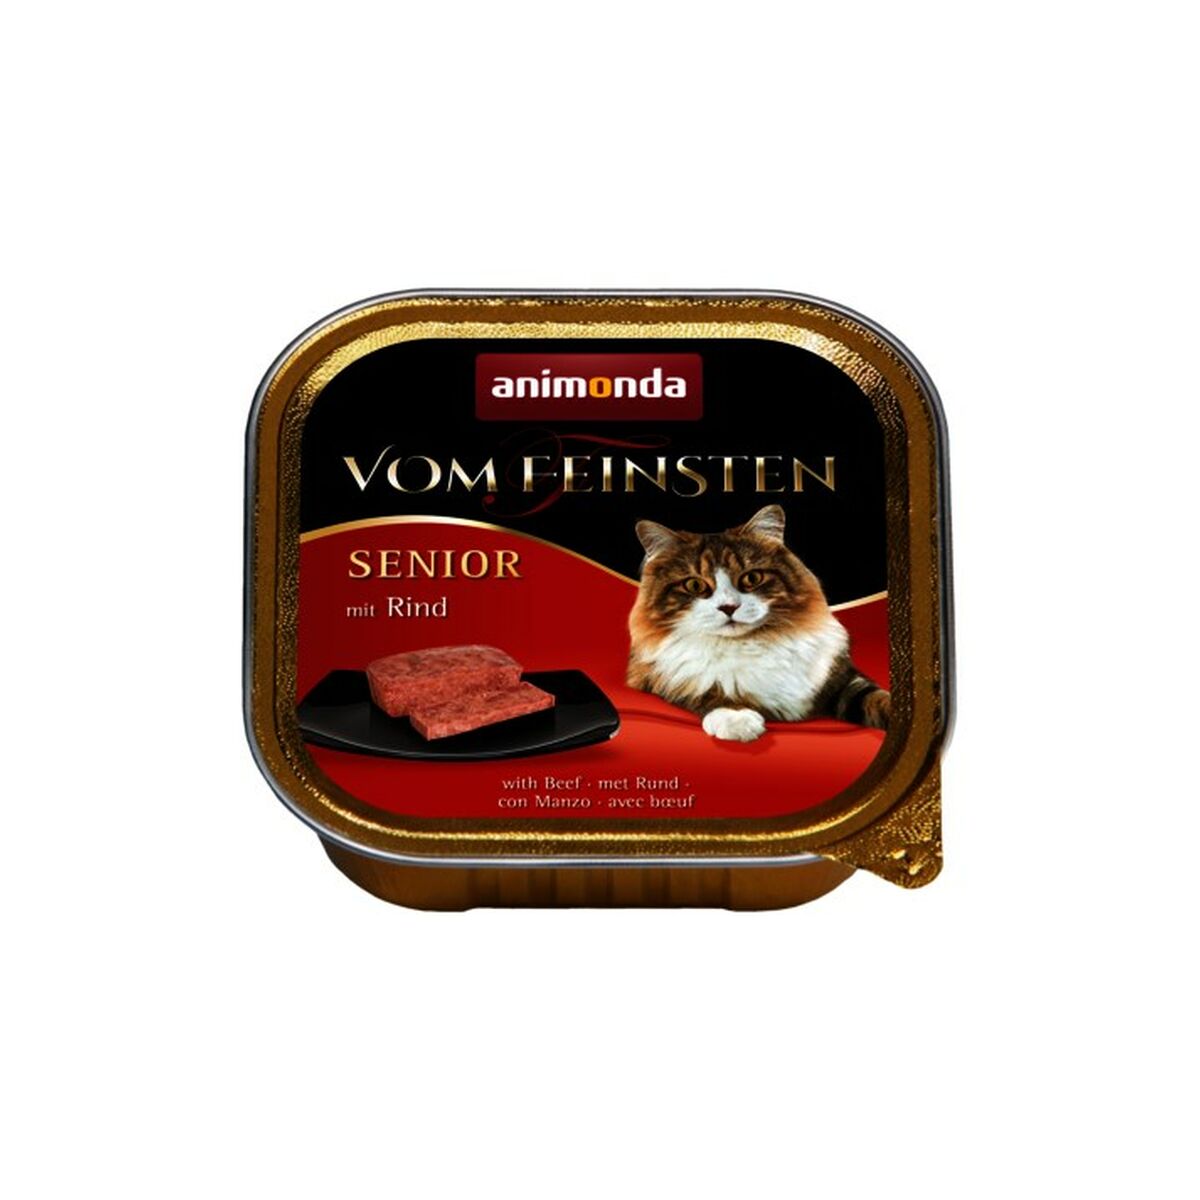 Aliments pour chat Animonda Vom Feinsten